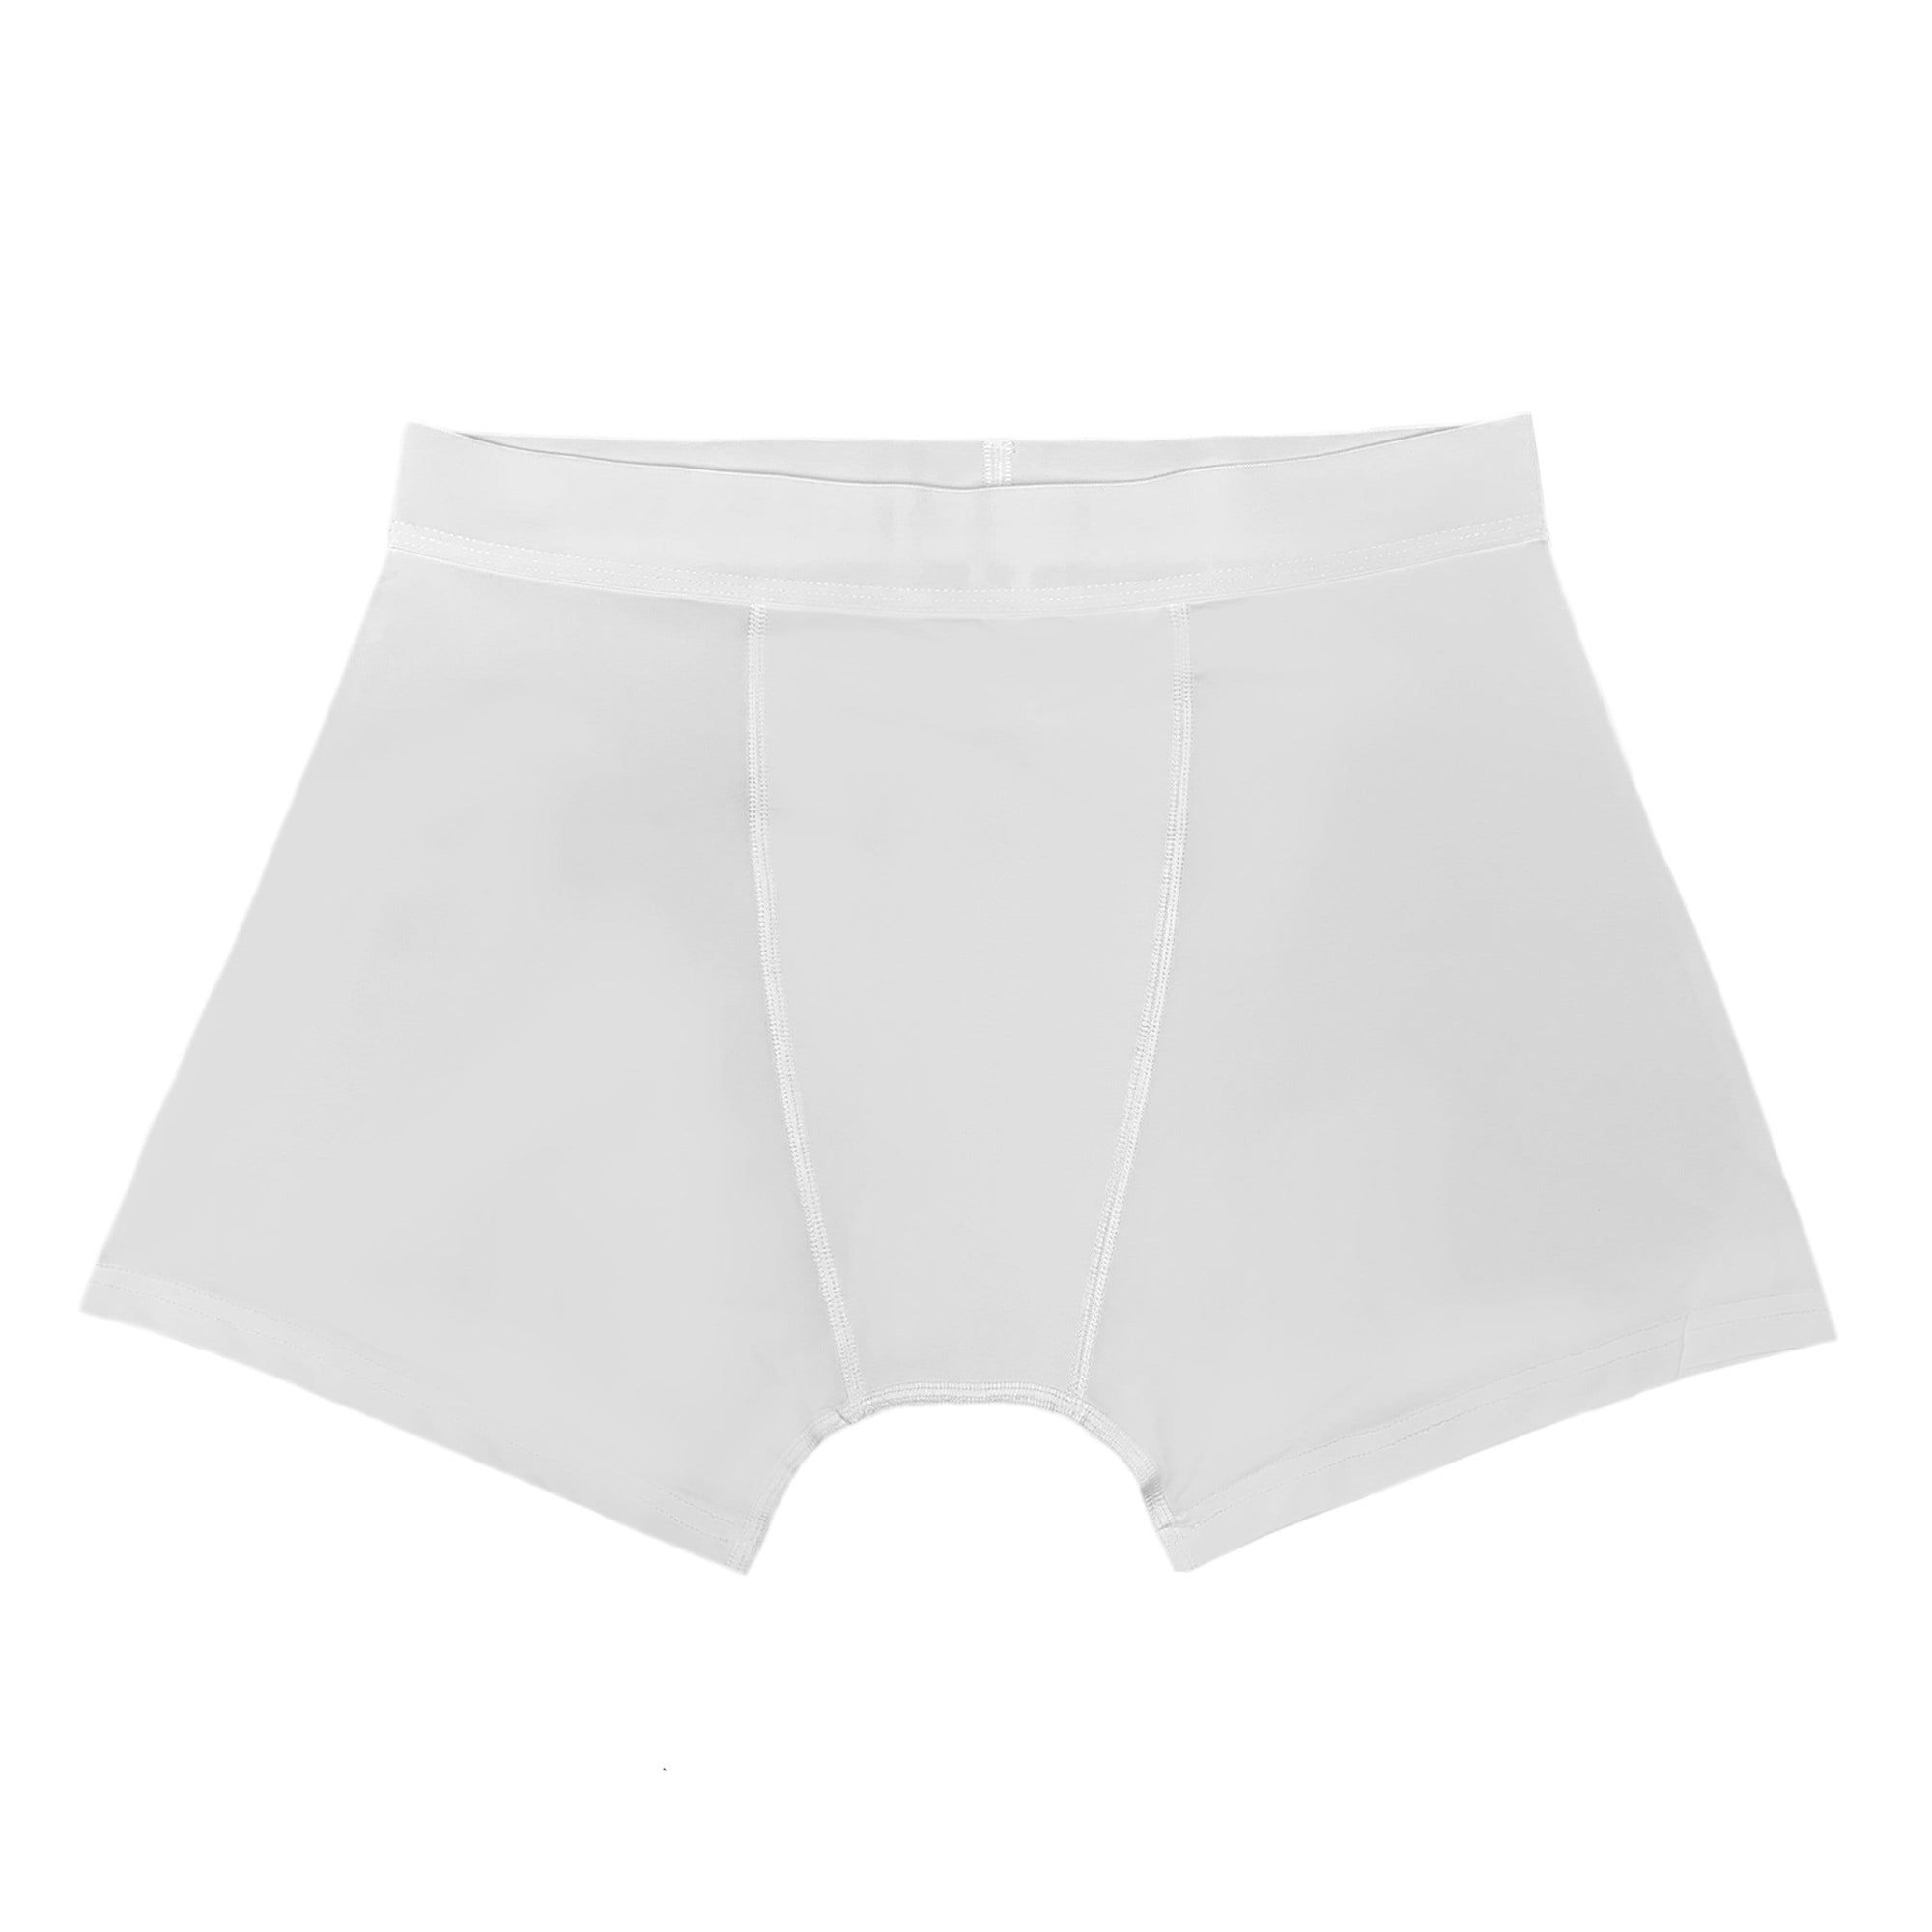 Soft wholesale blank underwear For Comfort 